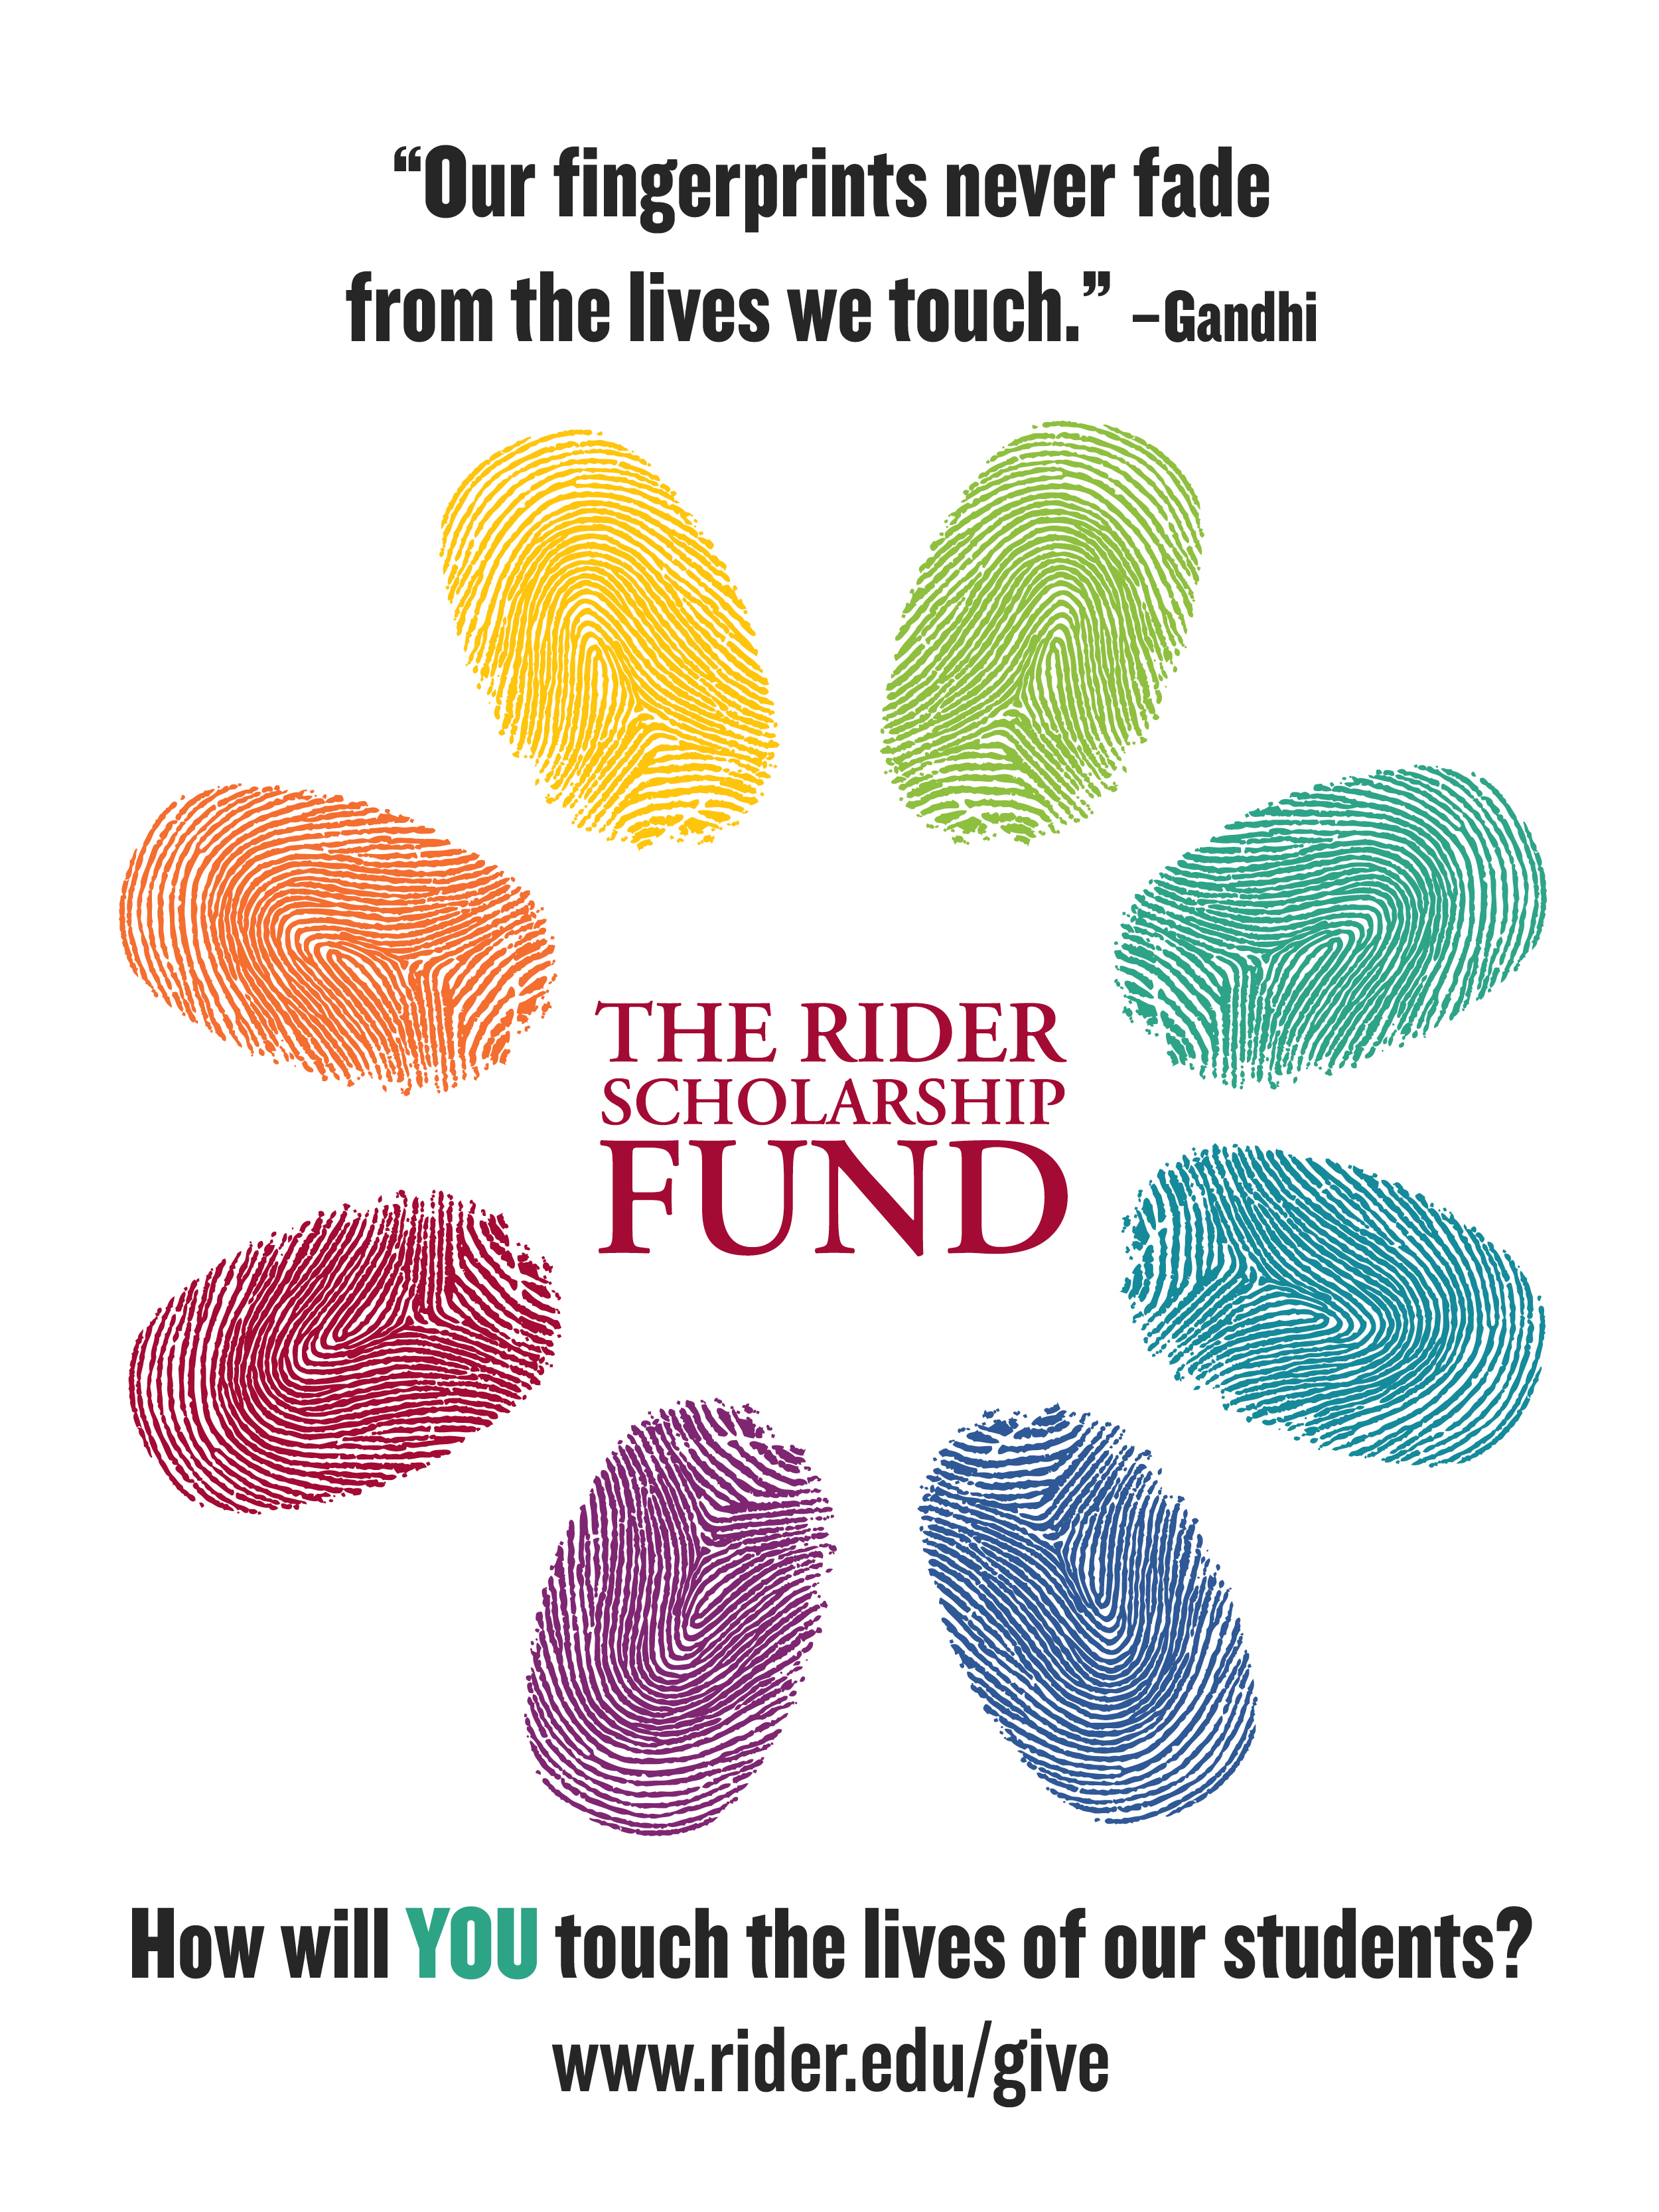 Rider scholarship fund